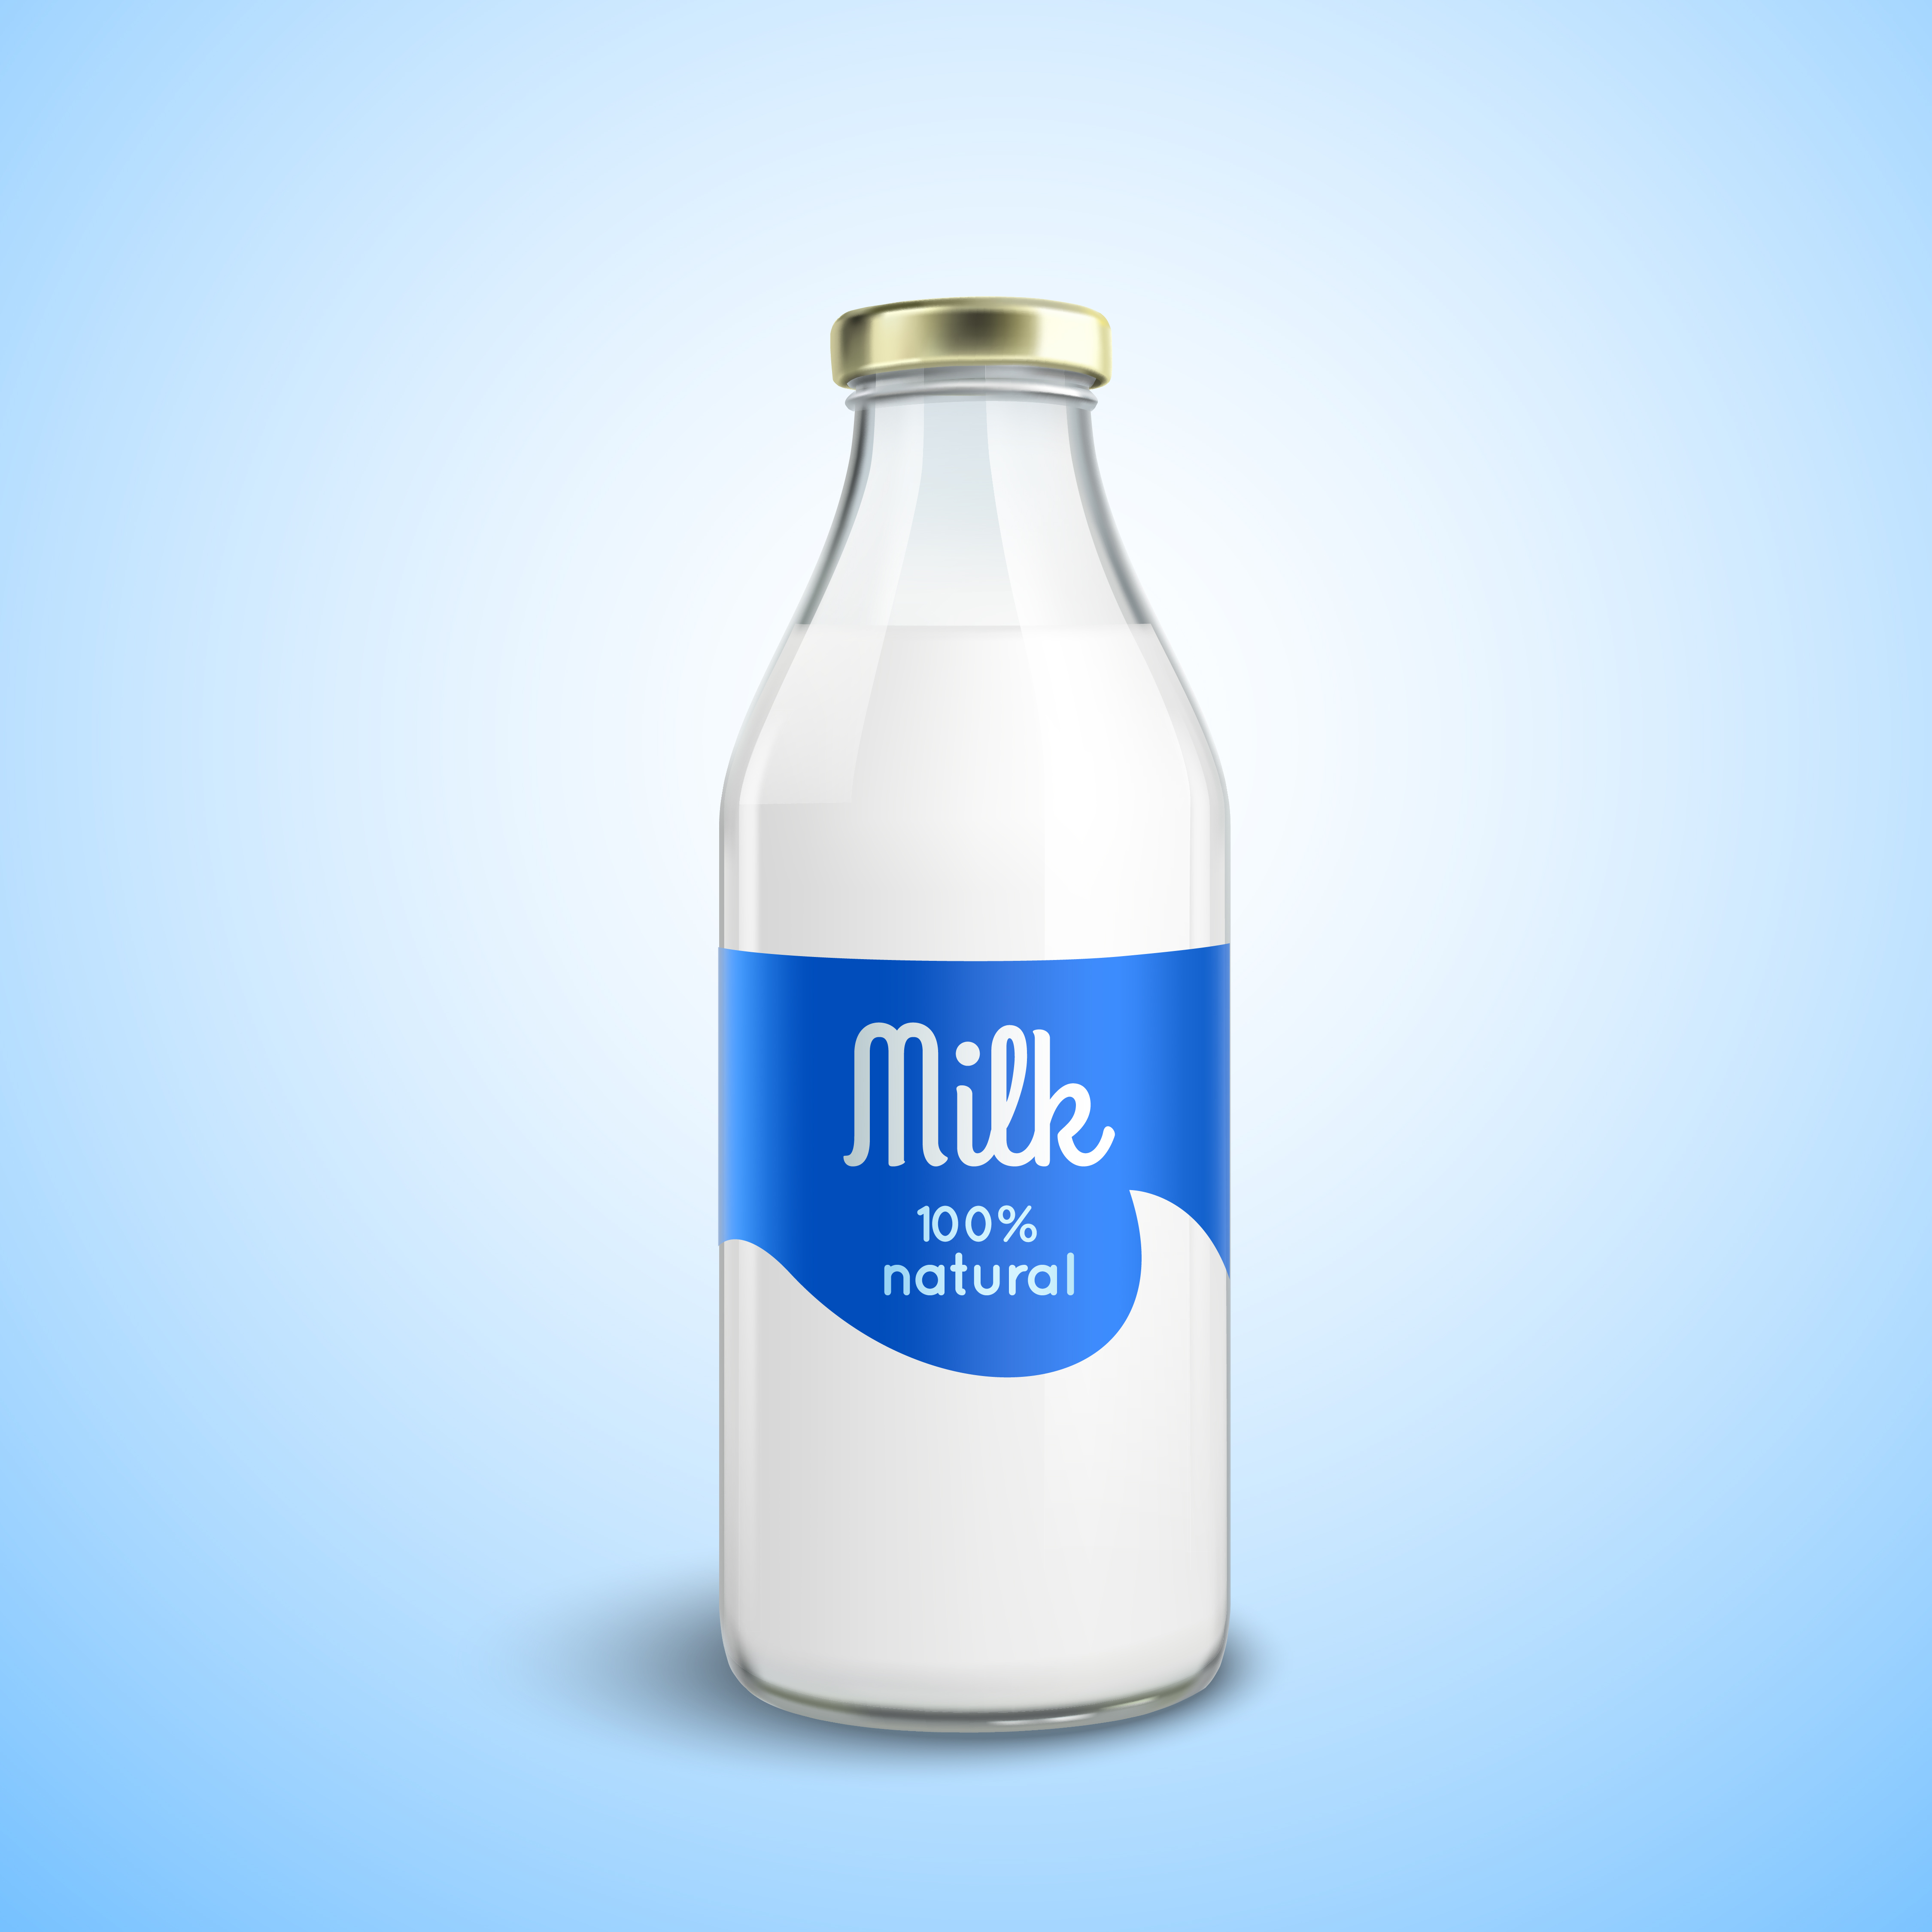 Download Closed Bottle Of Milk - Download Free Vectors, Clipart Graphics & Vector Art